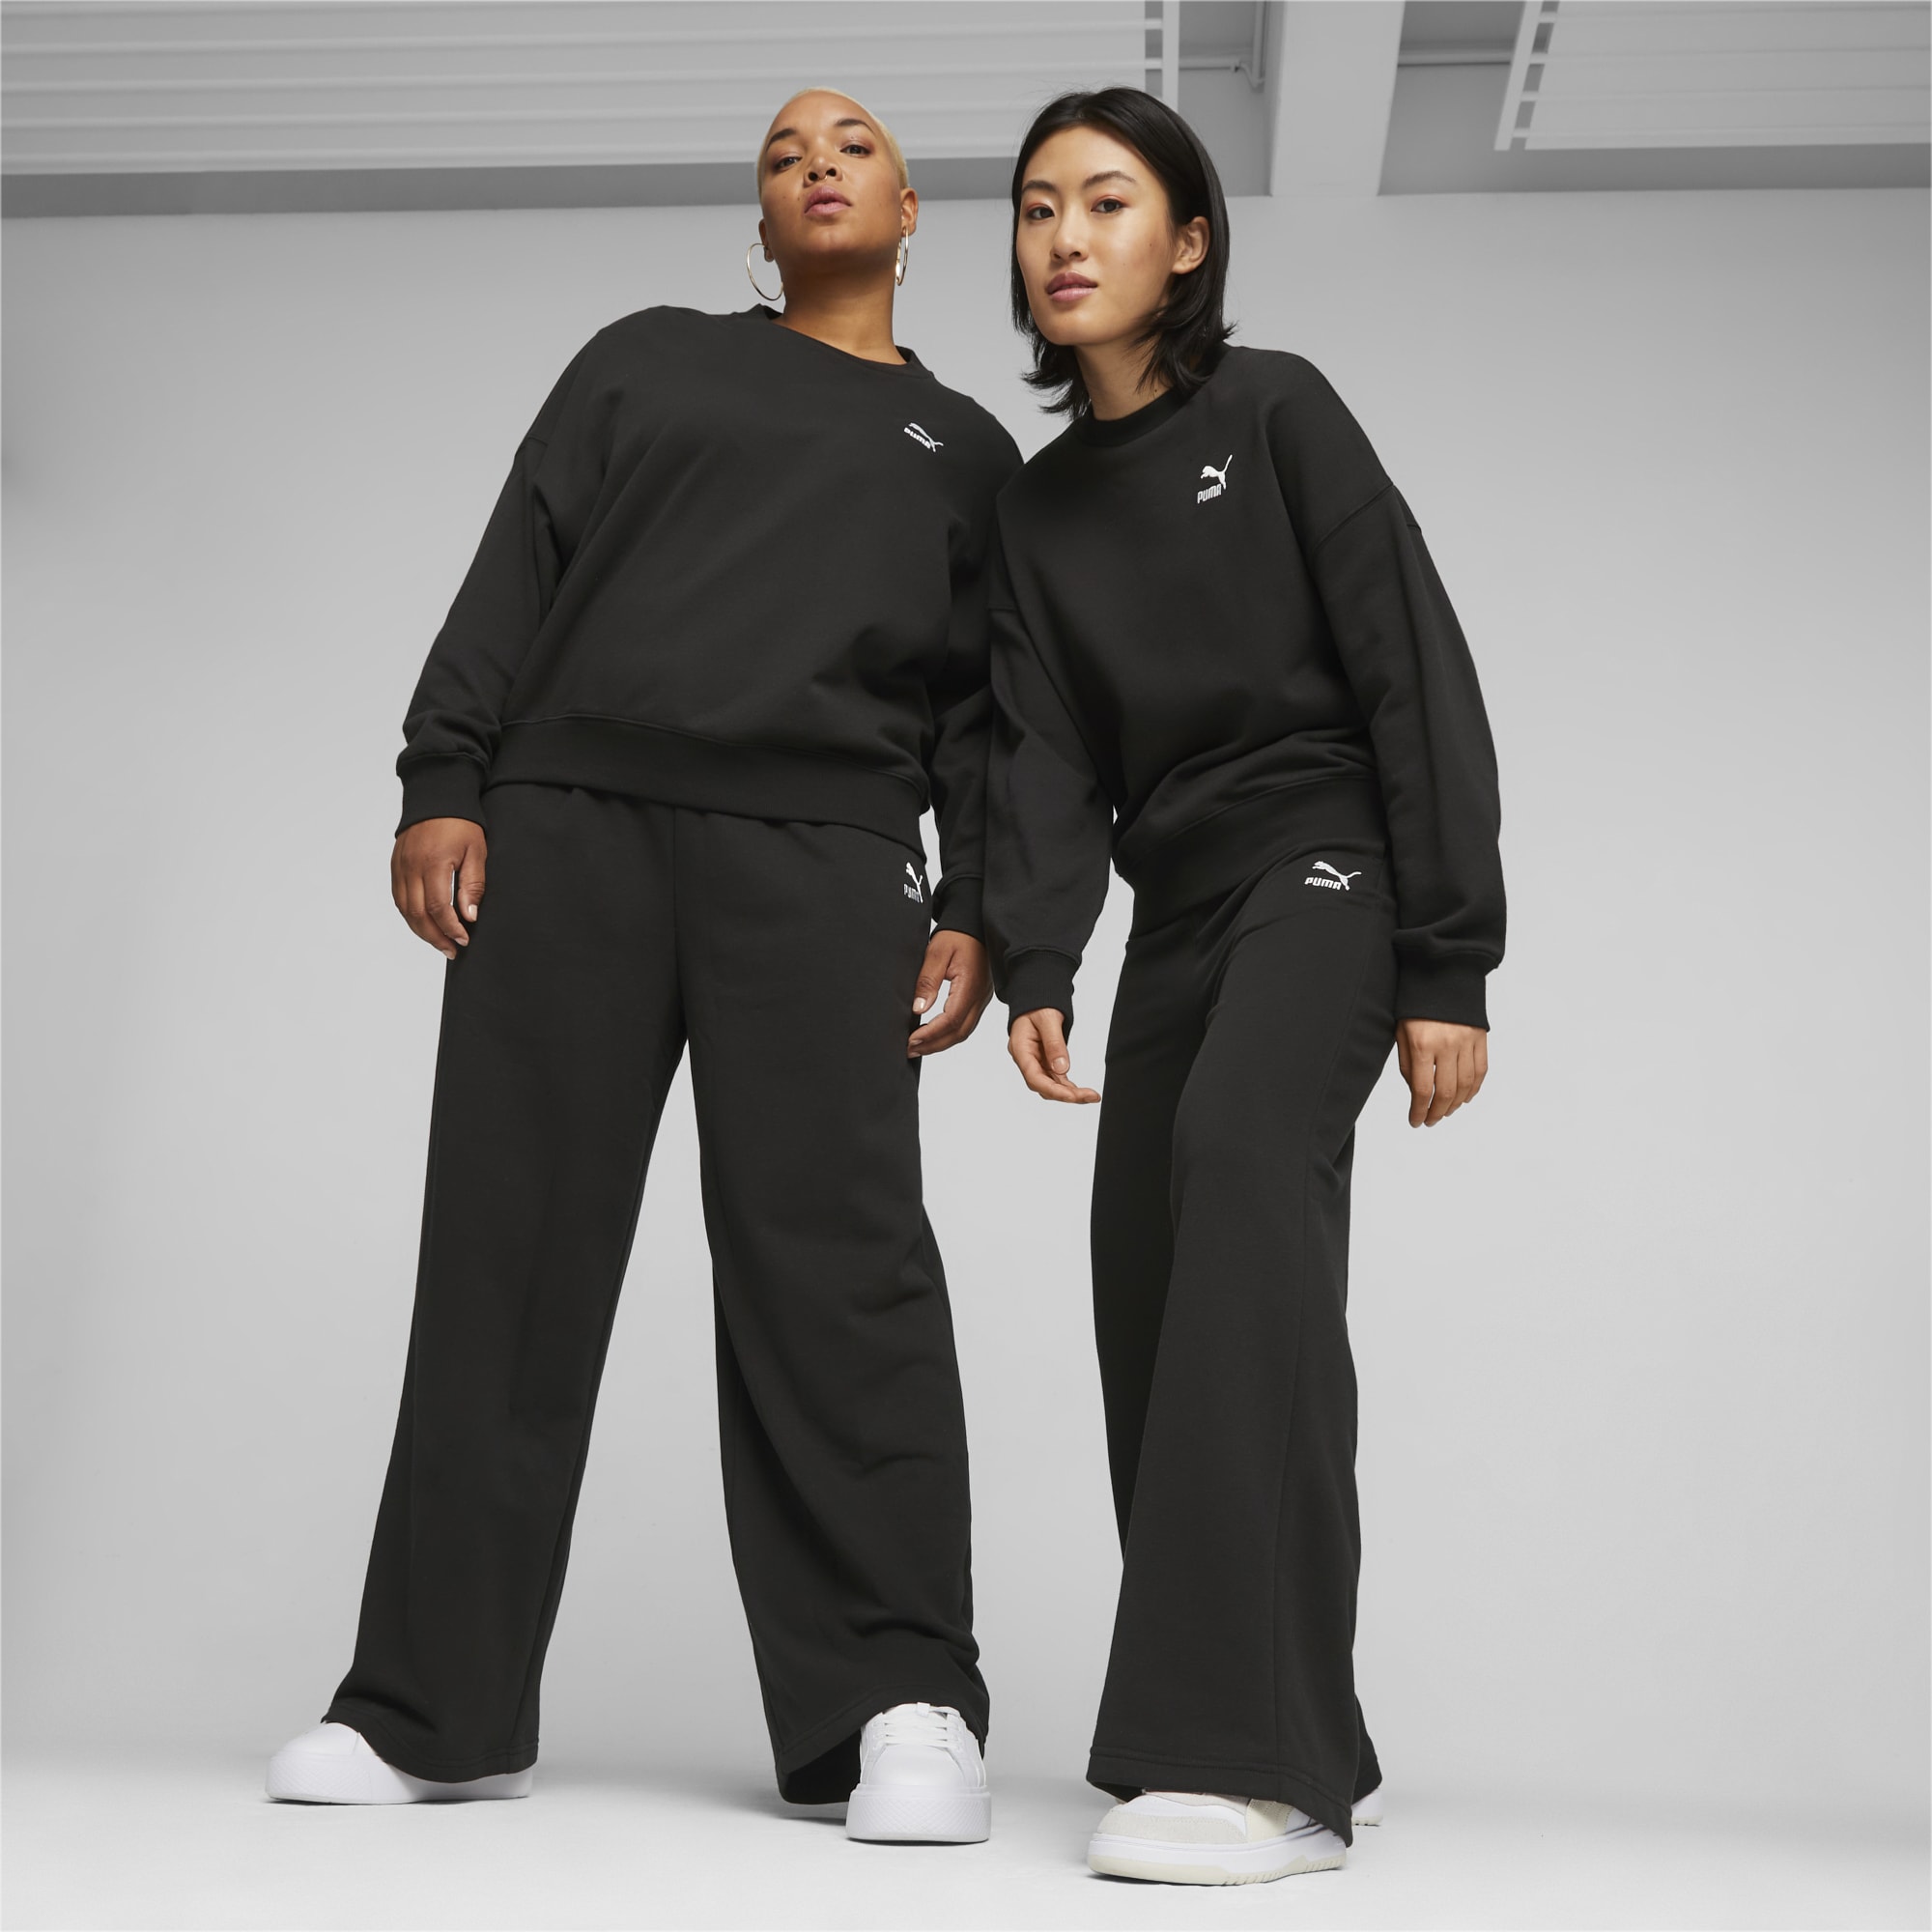 PUMA Classics Women's Relaxed Sweatpants, Black, Size L, Clothing